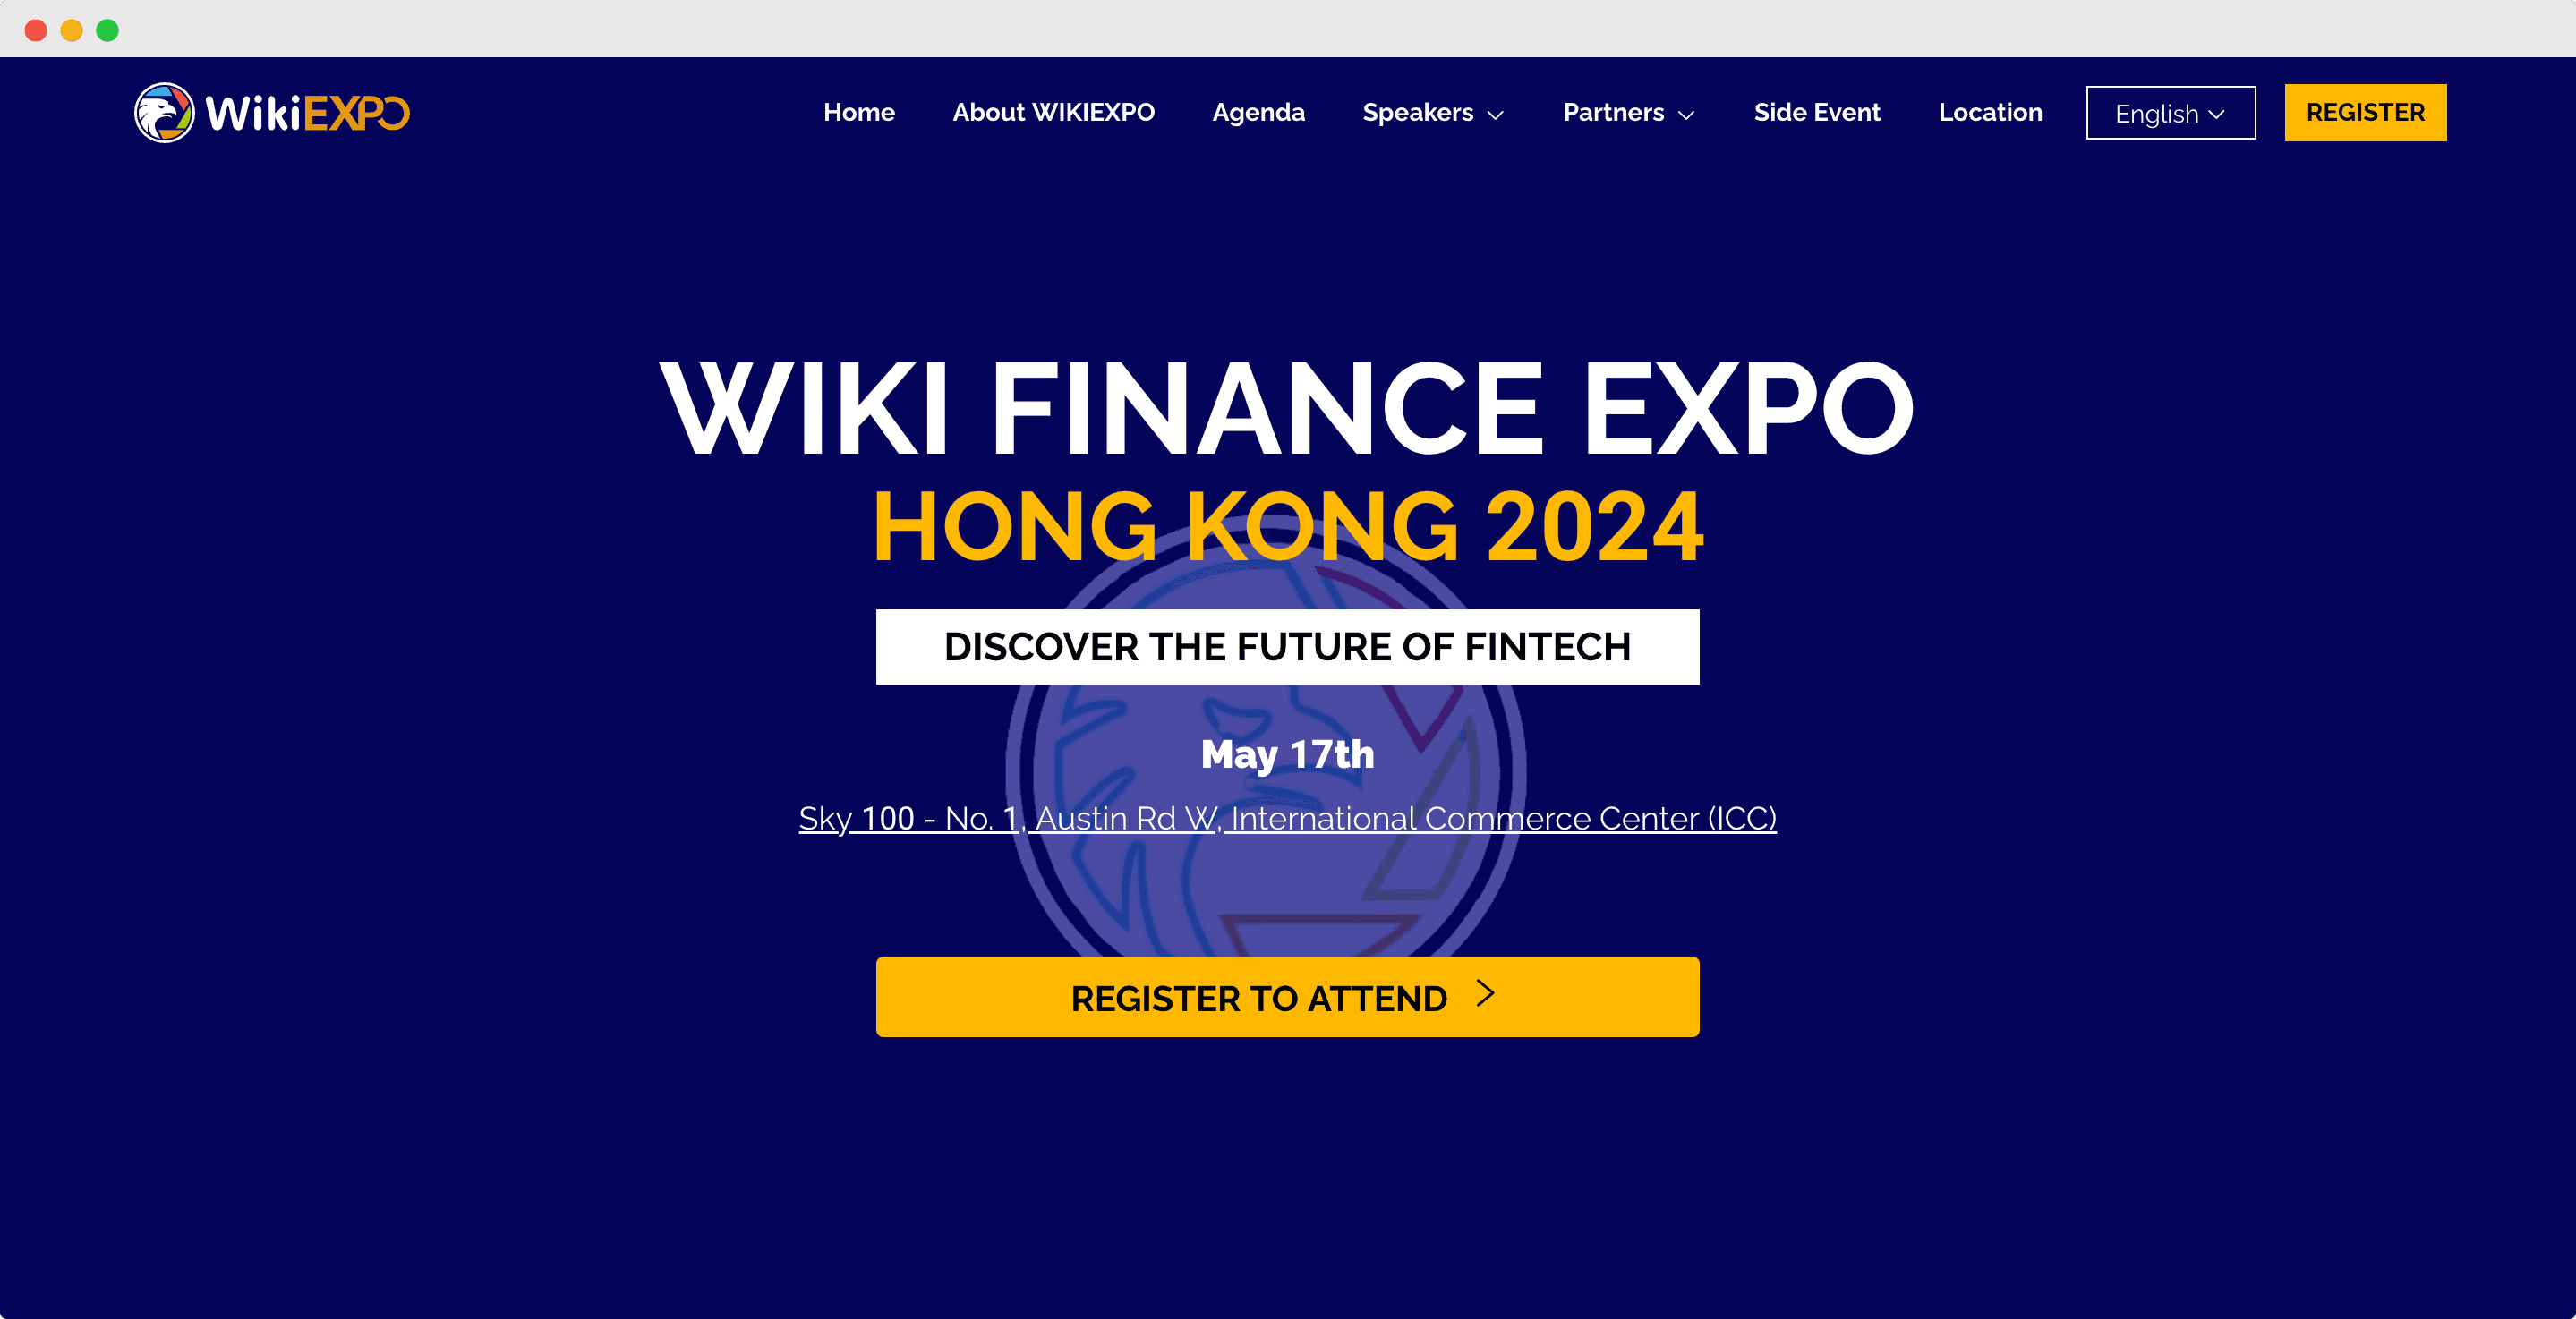 Wiki Finance Expo, Hong Kong 2024